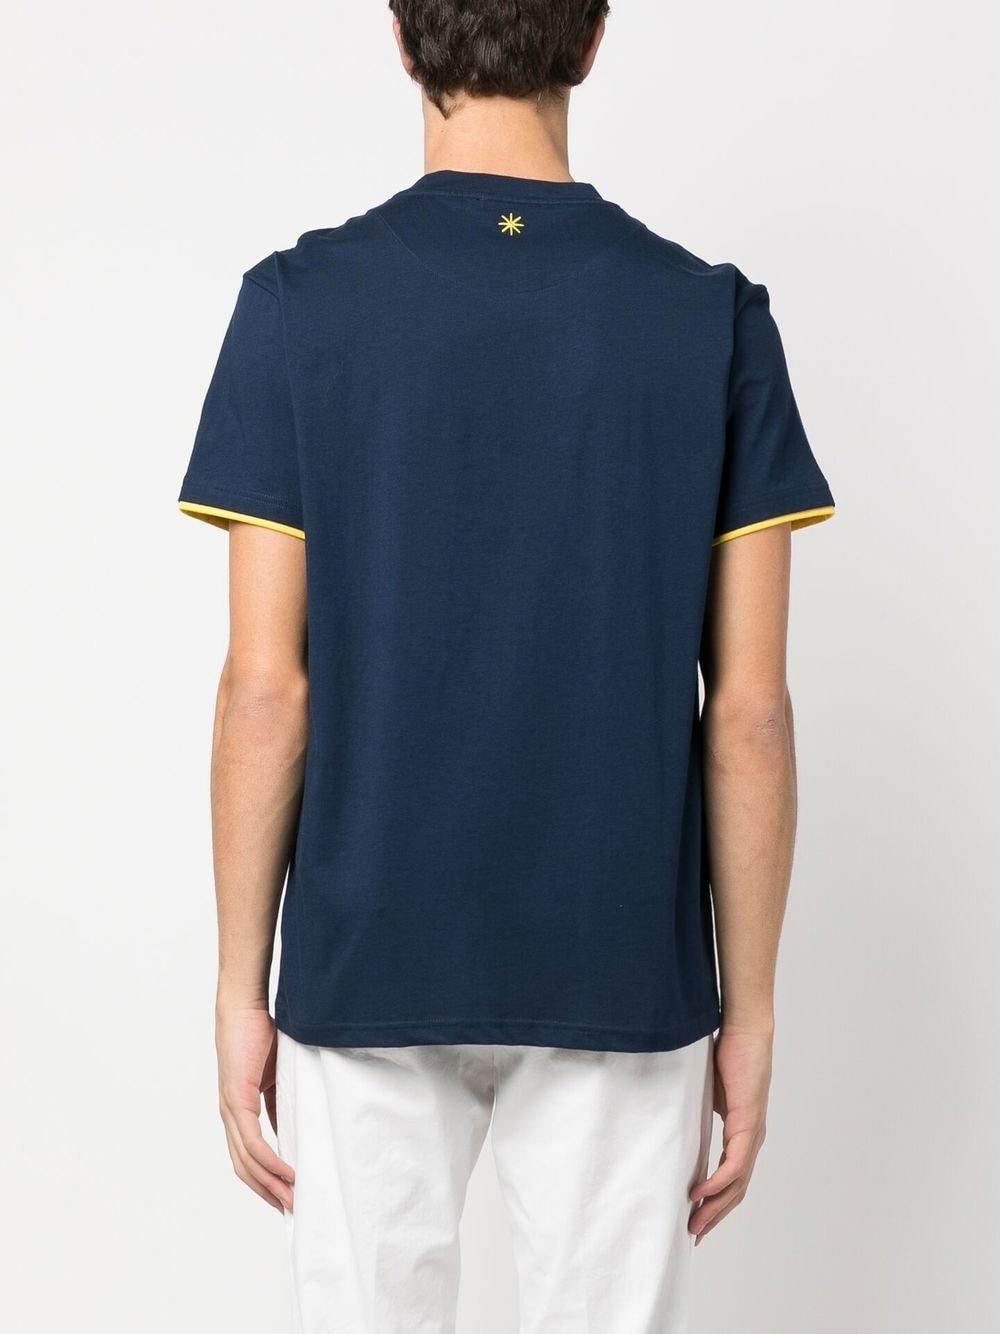 Manuel Ritz Patch Pocket Cotton T-shirt in Blue for Men | Lyst